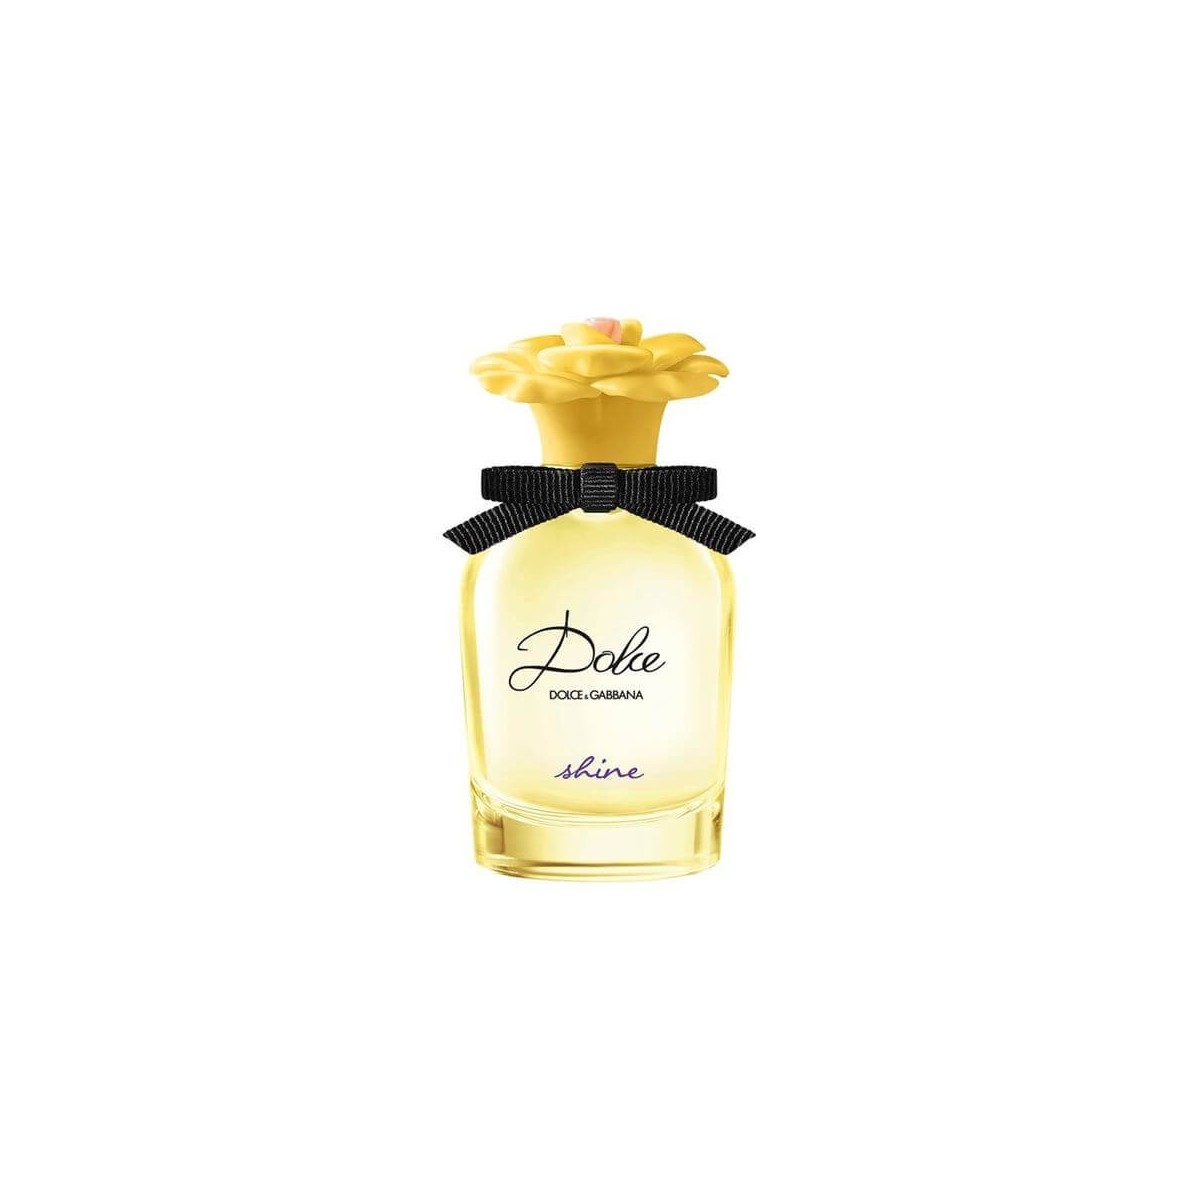 Dolce&Gabbana Shine Eau de Parfum 30ml spray